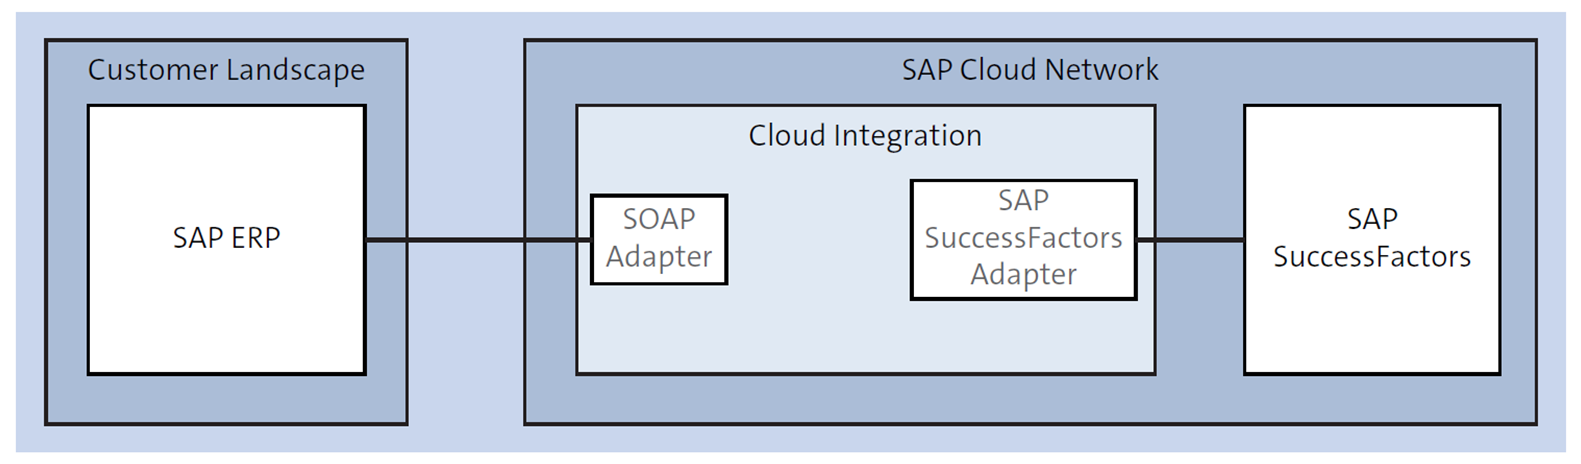 Integrating SAP ERP with SAP SuccessFactors through Cloud Integration